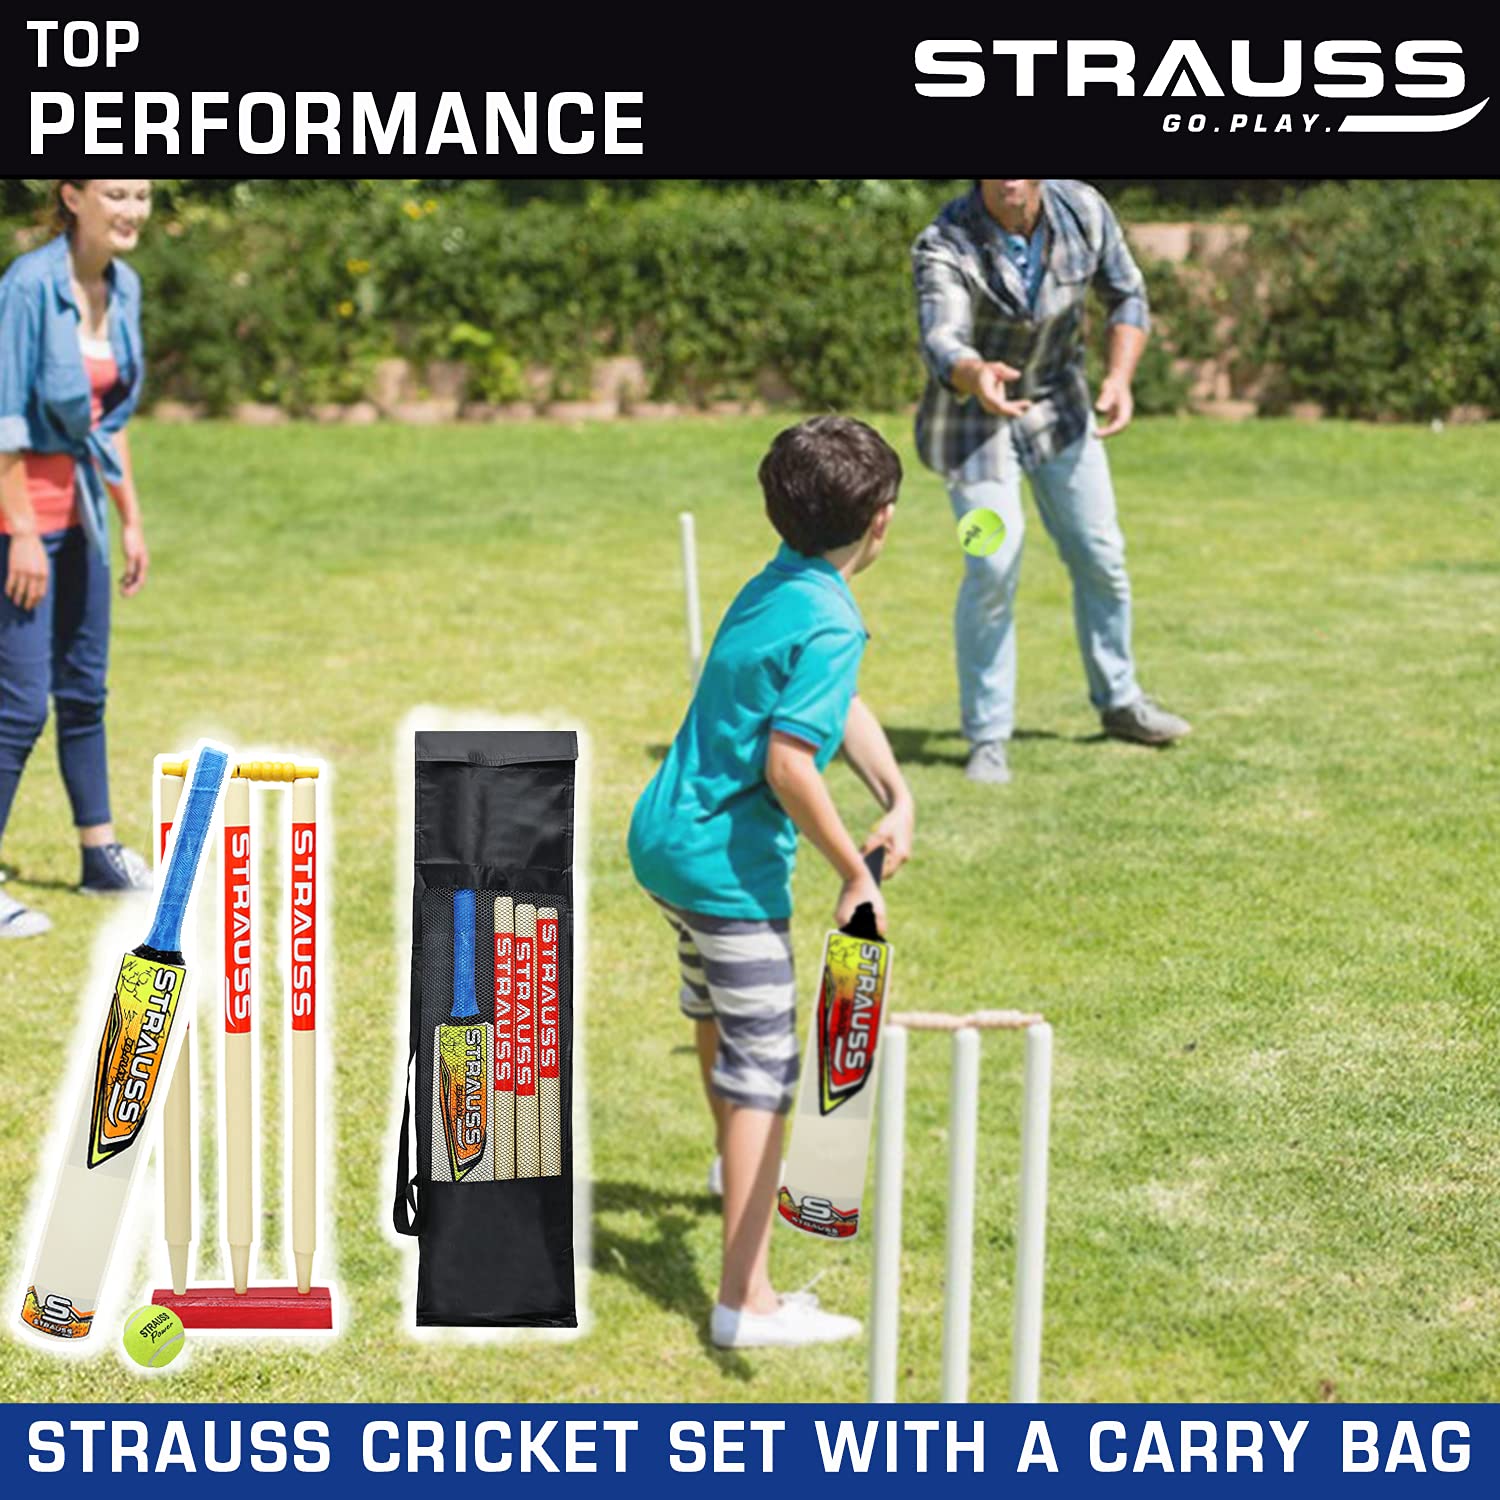 Strauss Cricket Kit, Size- 1 (Popular Willow bat+3 Stumps+Holder+1 Ball+Carry Bag)